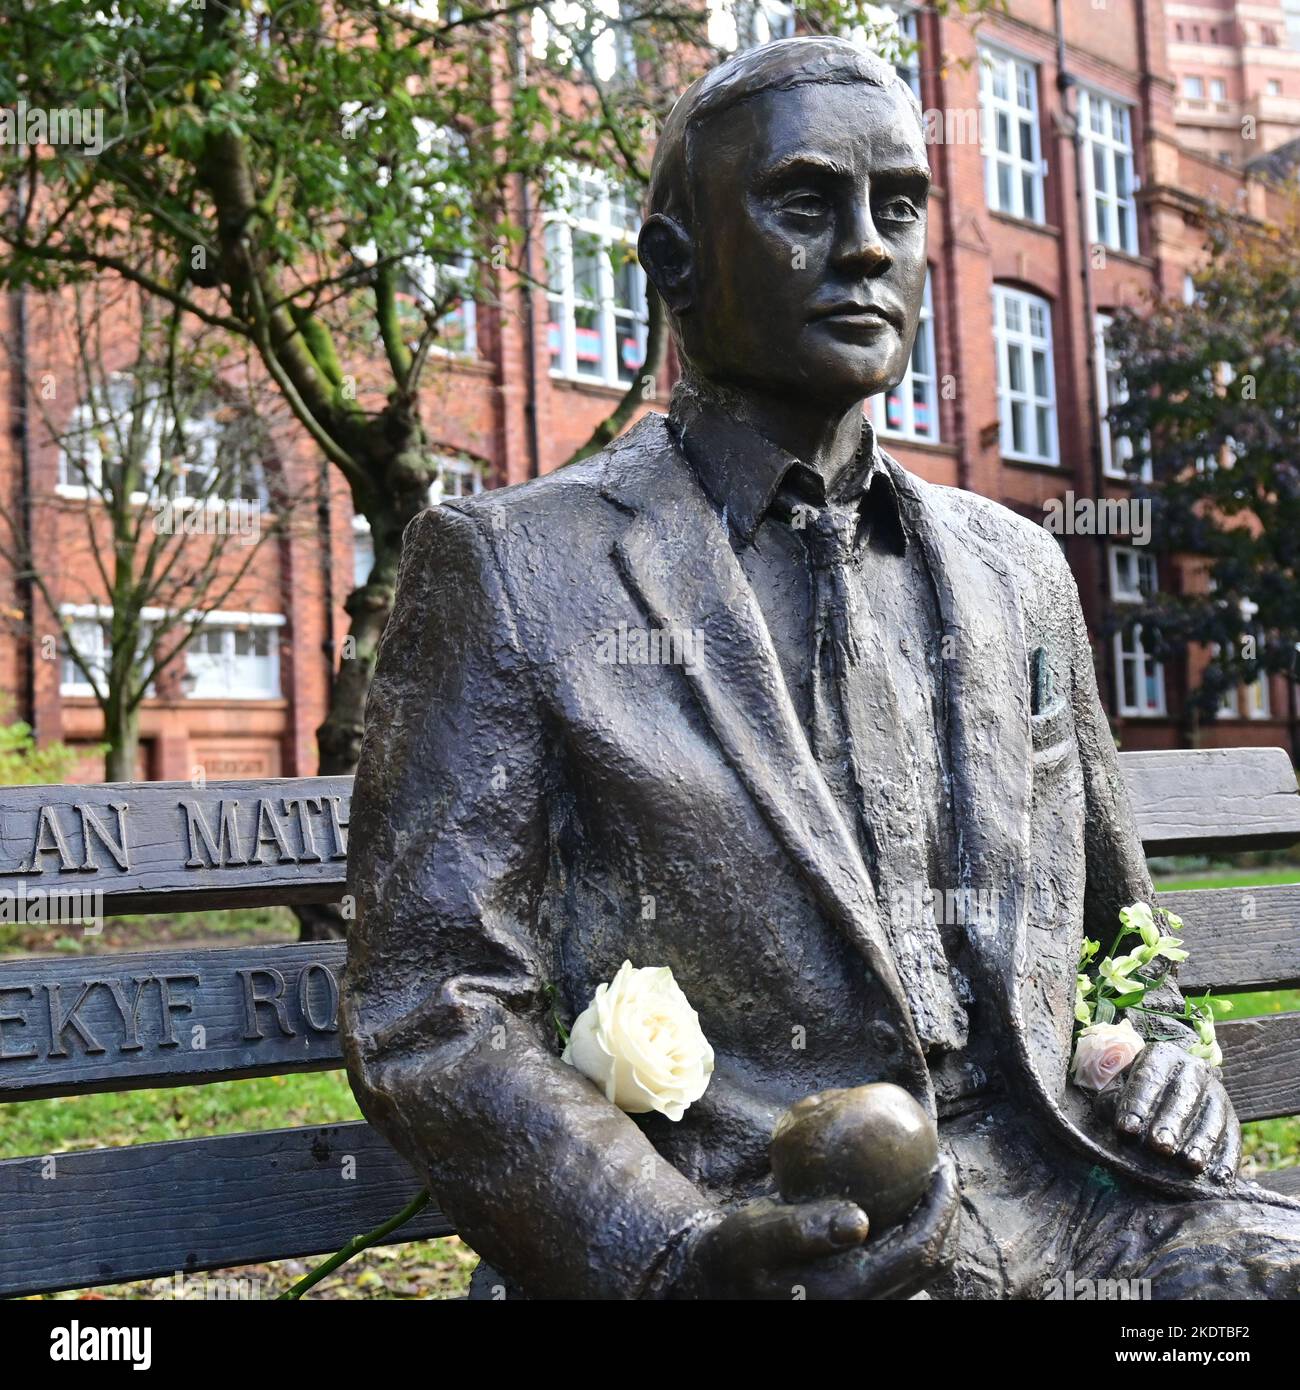 Alan Turing statue Stock Photo